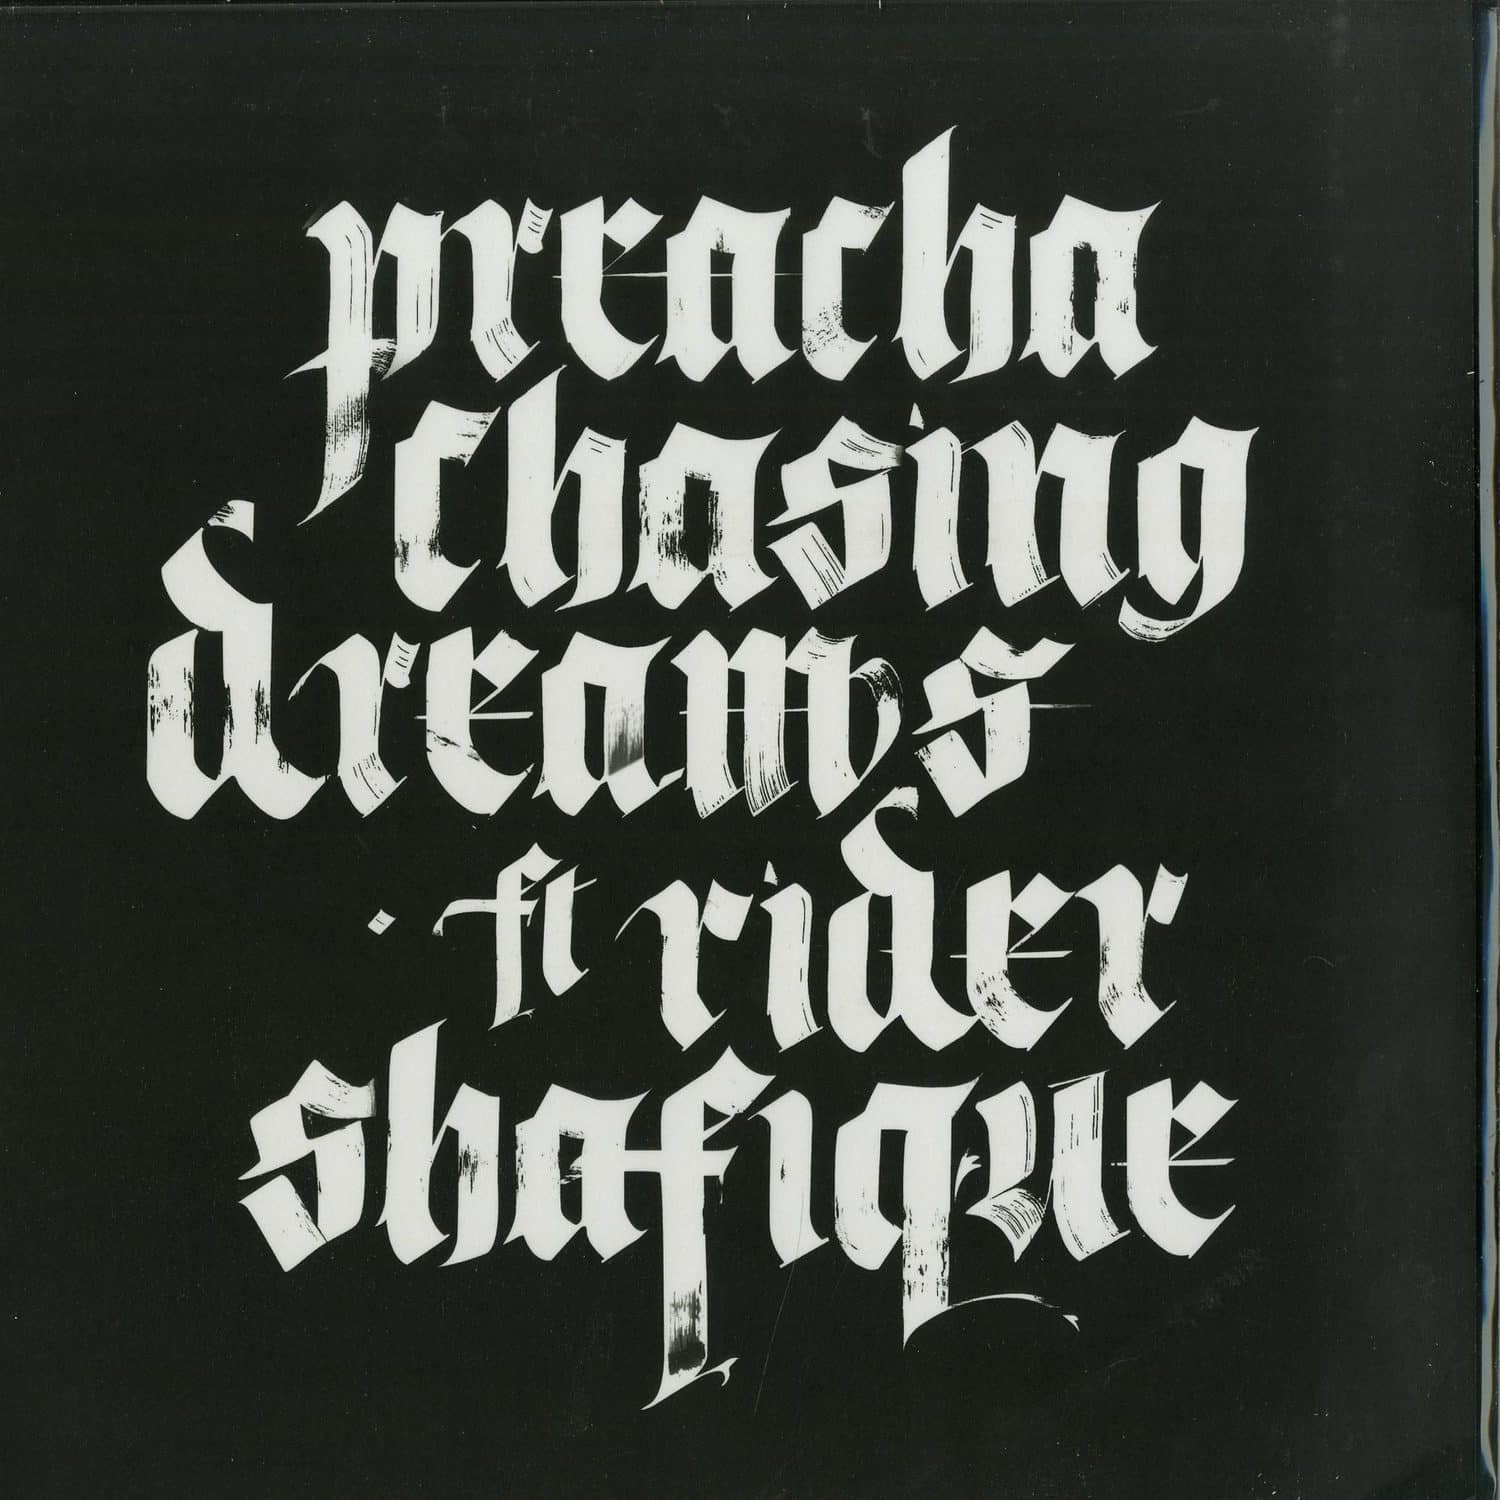 Preacha - CHASING DREAMS FT. RIDER SHAFIQUE